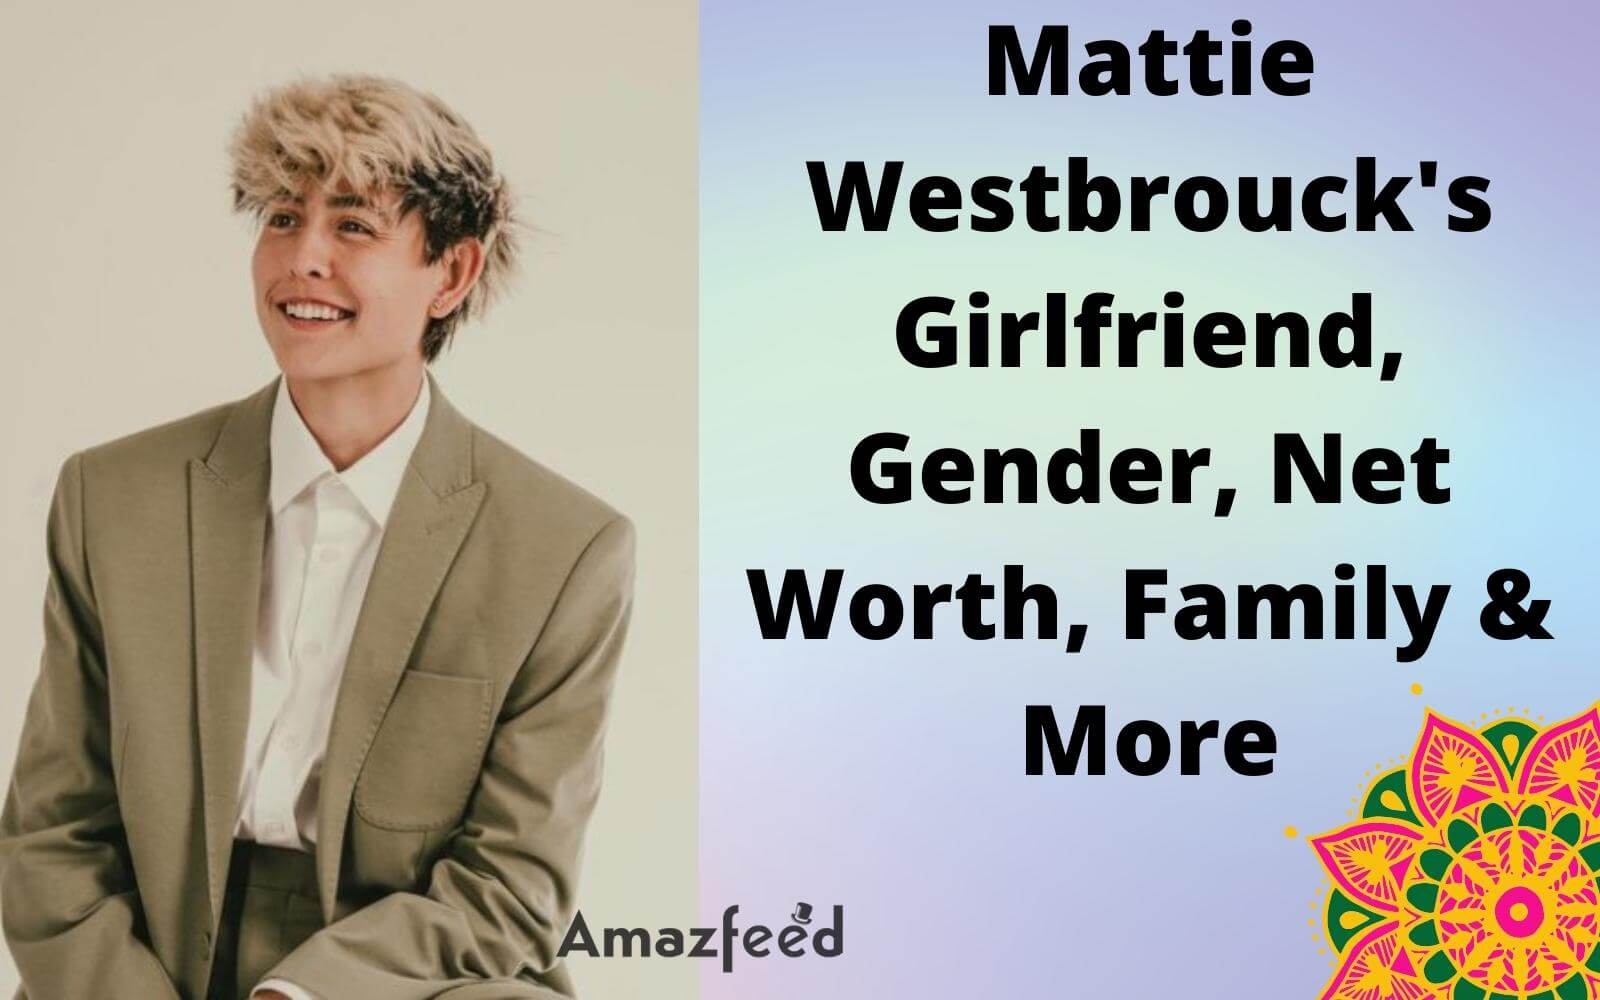 Mattie Westbrouck's Girlfriend, Gender, Net Worth, Family & More